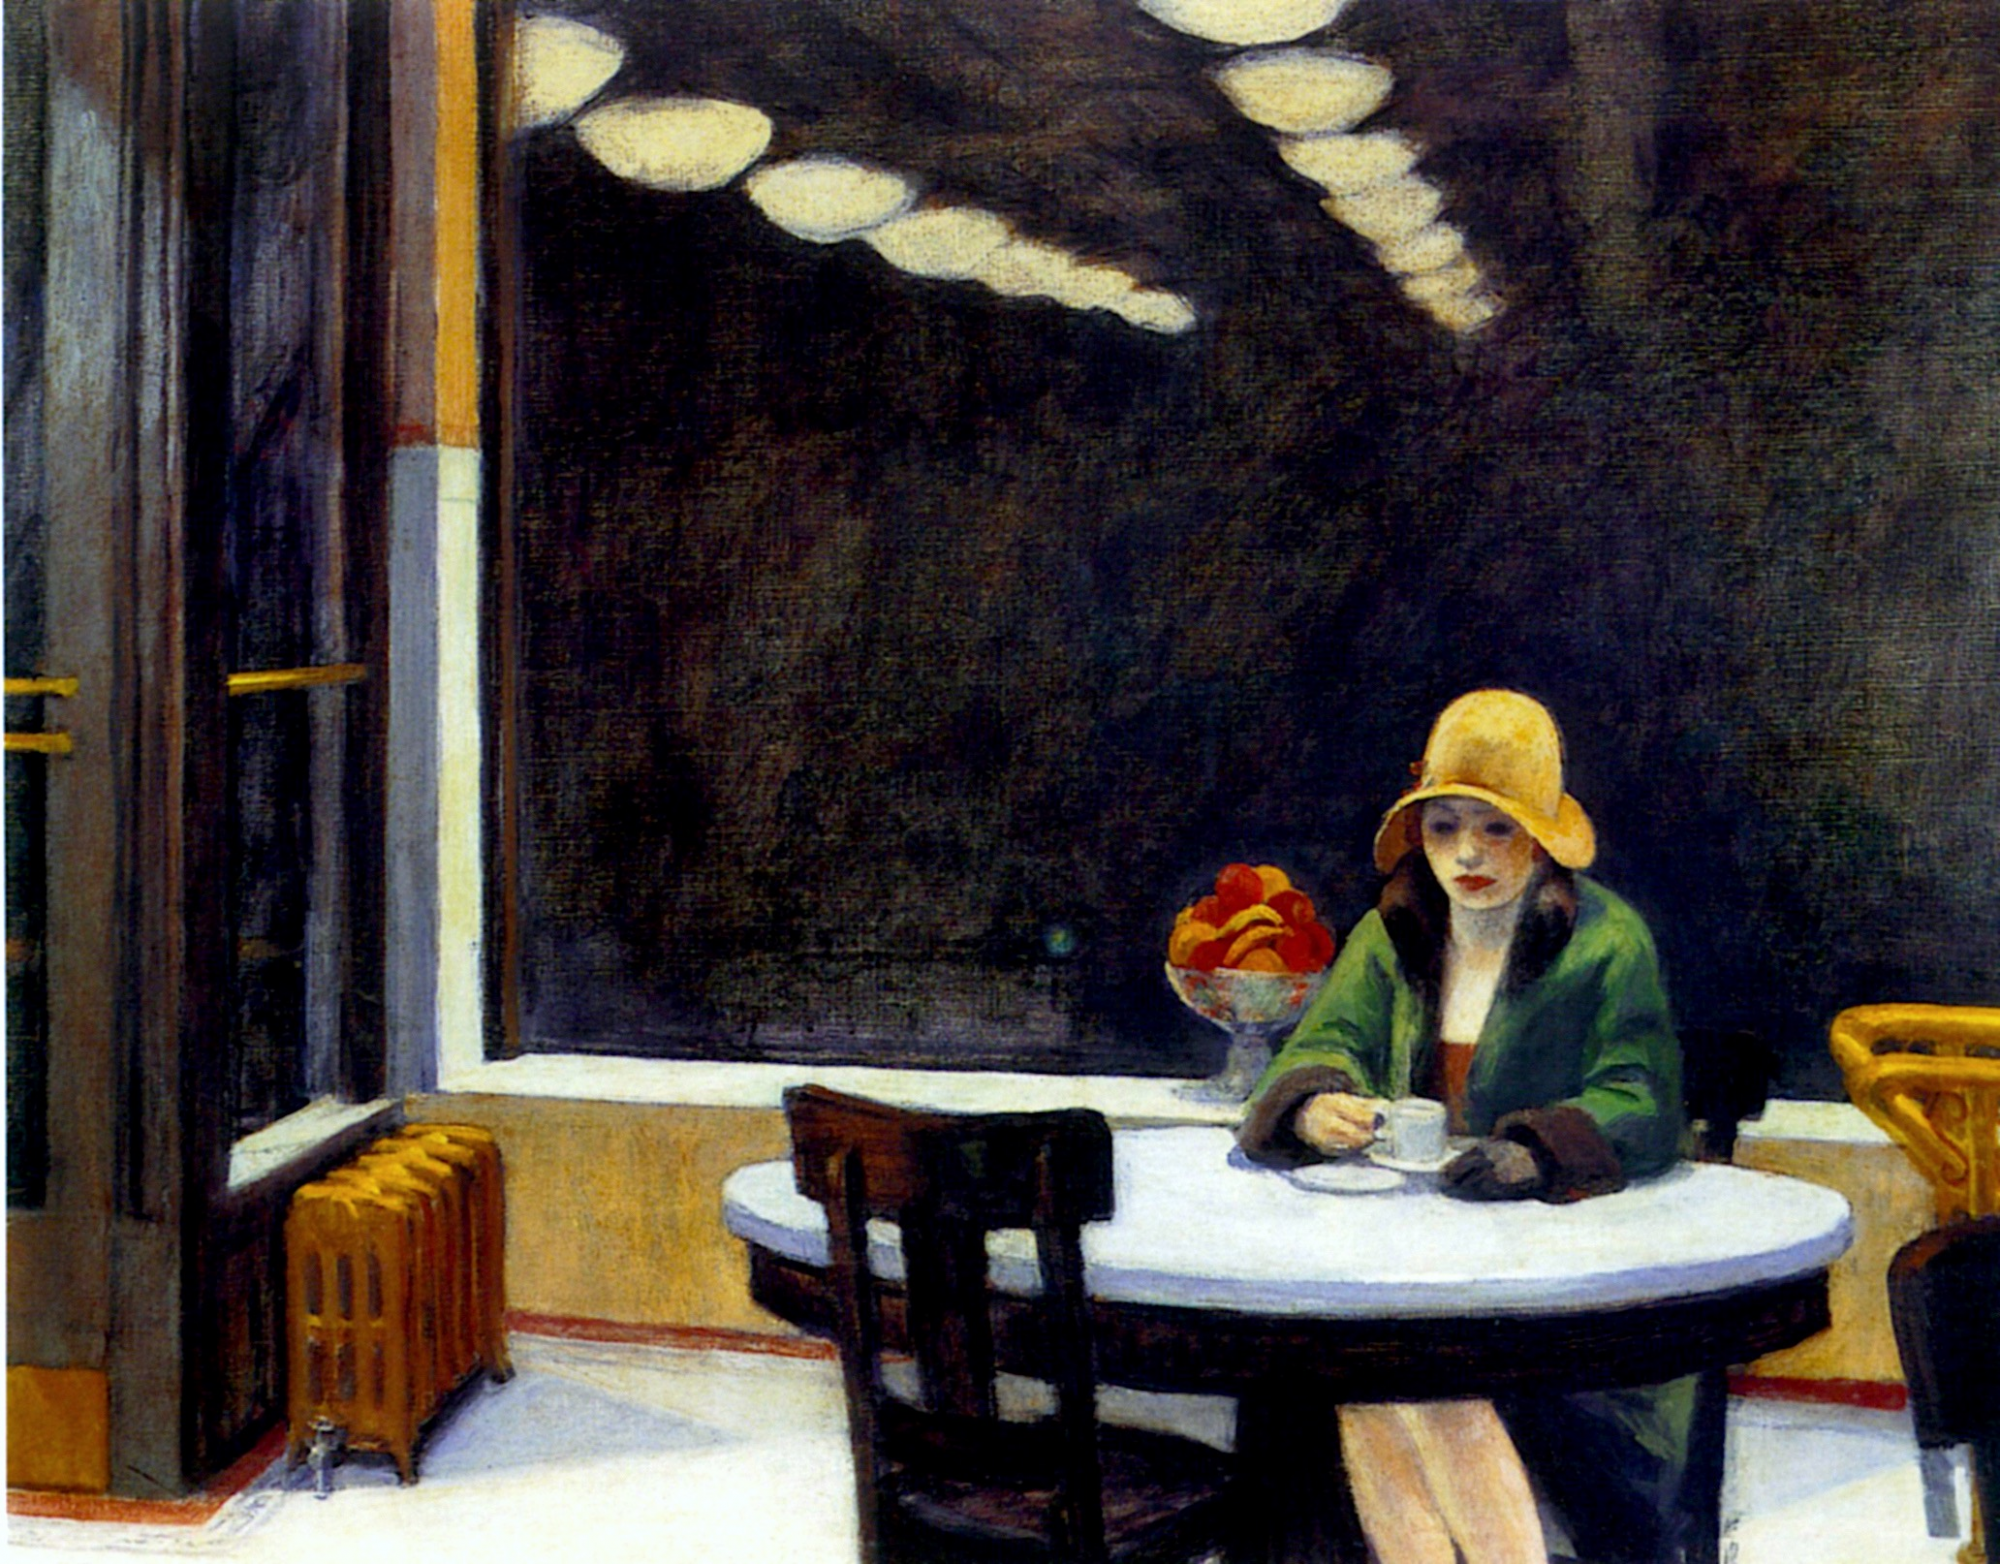 Automat - Edward Hopper - Historia Arte (HA!)